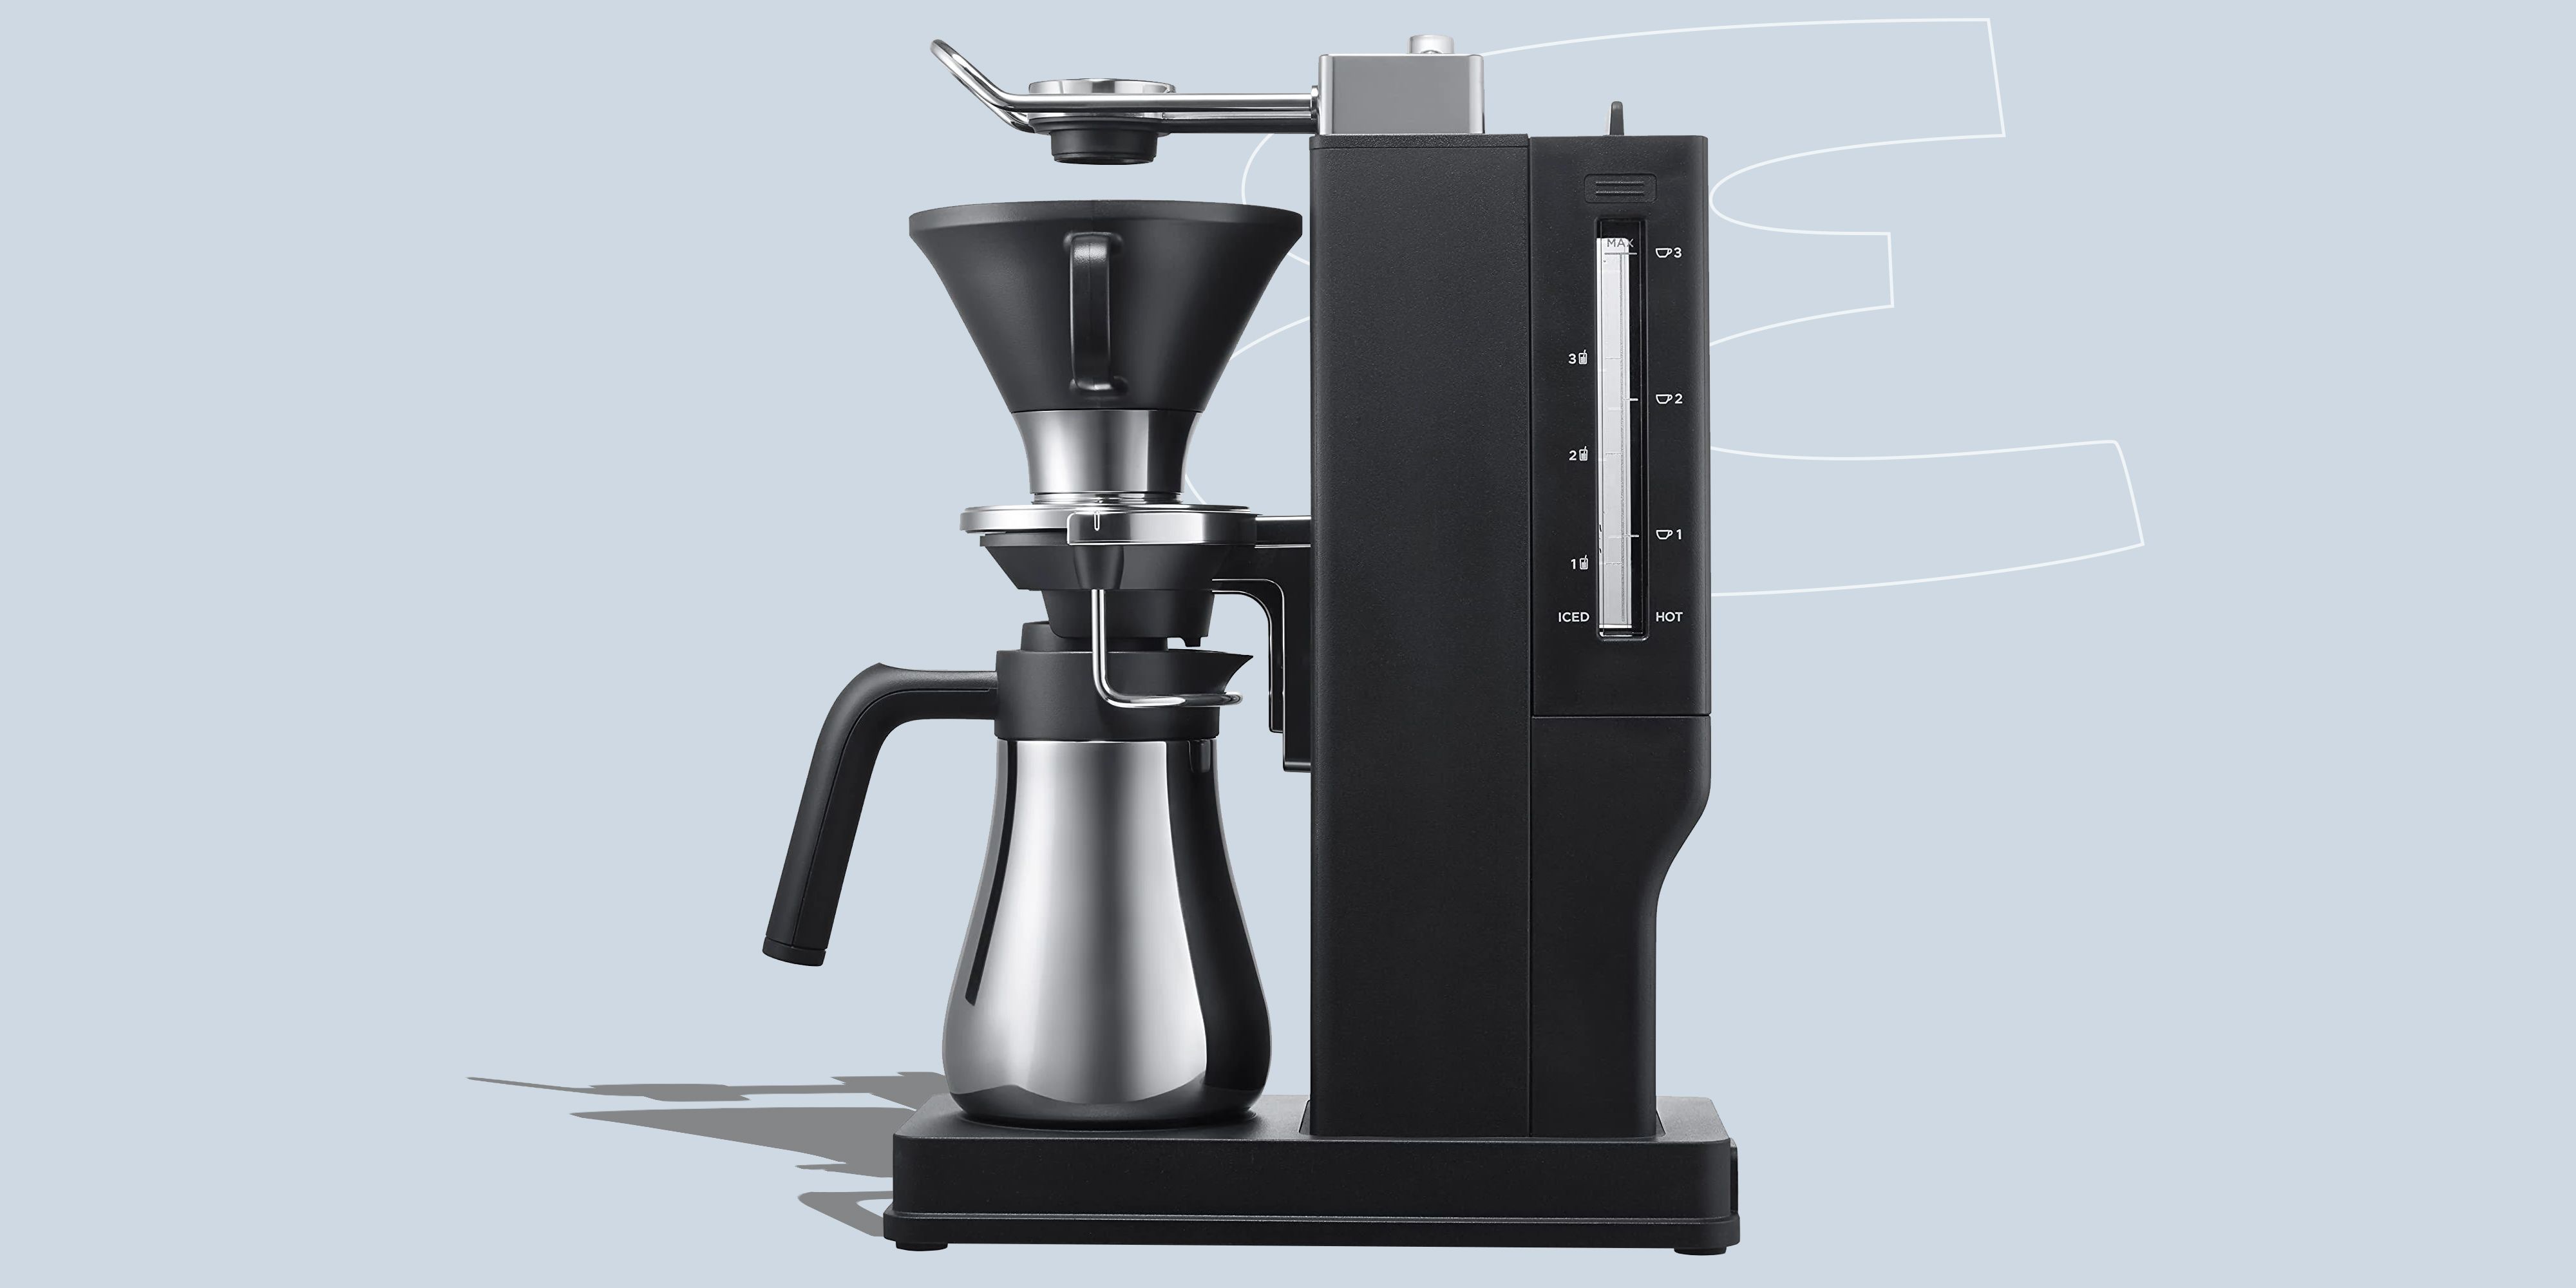 Wilfa UK - Coffee Equipment and Kitchen Appliances